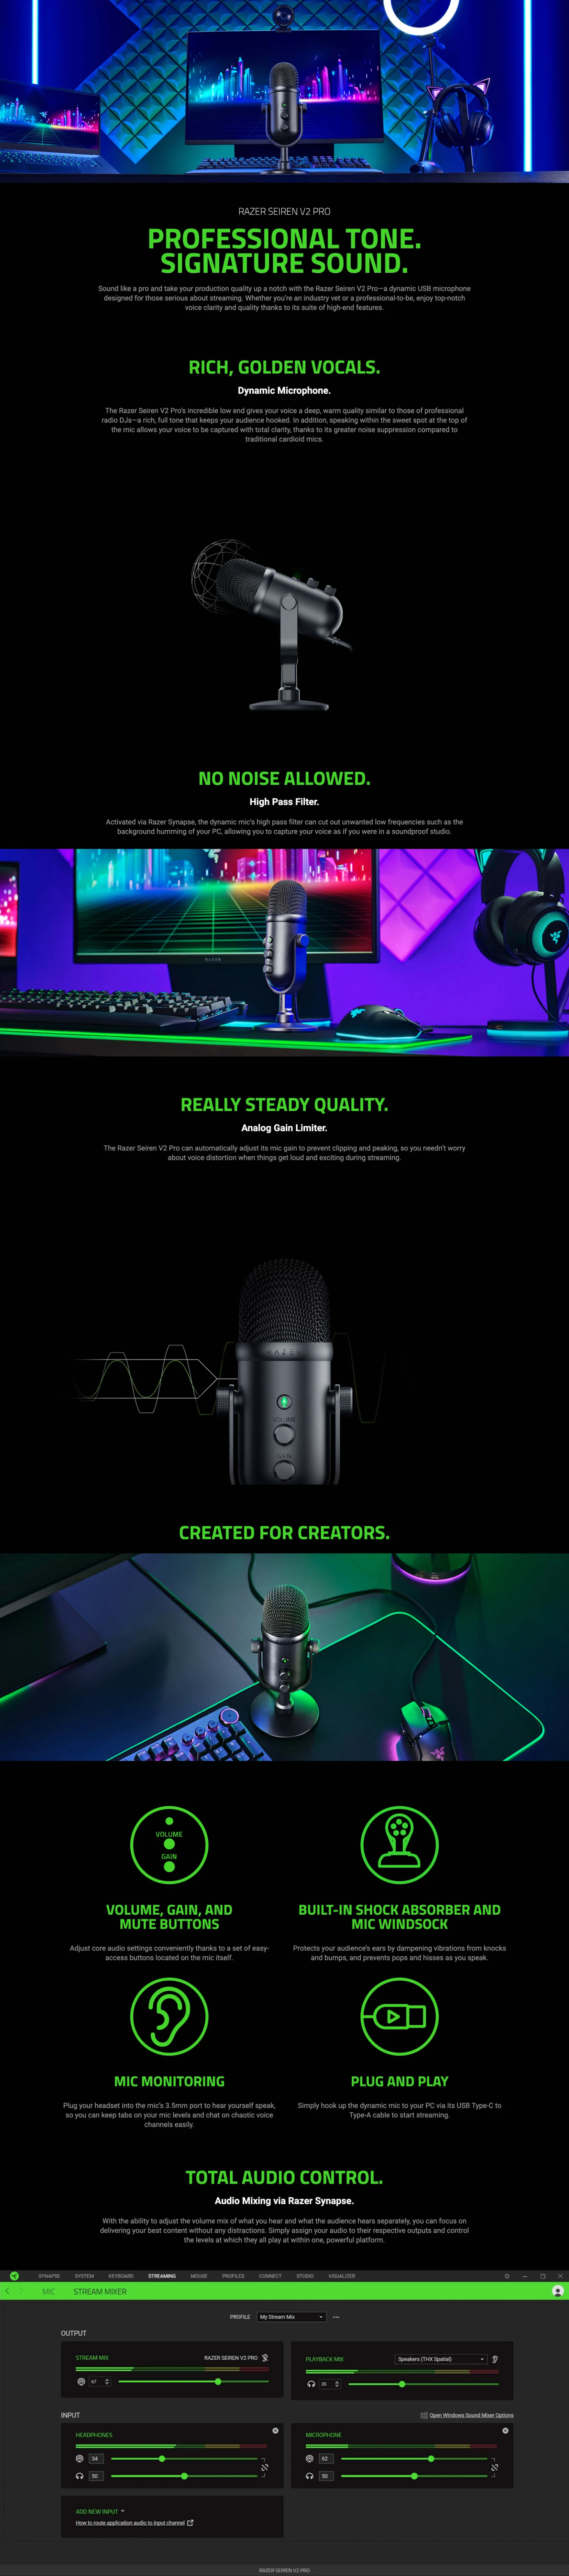 Razer Seiren V2 Pro Professional-grade USB Microphone